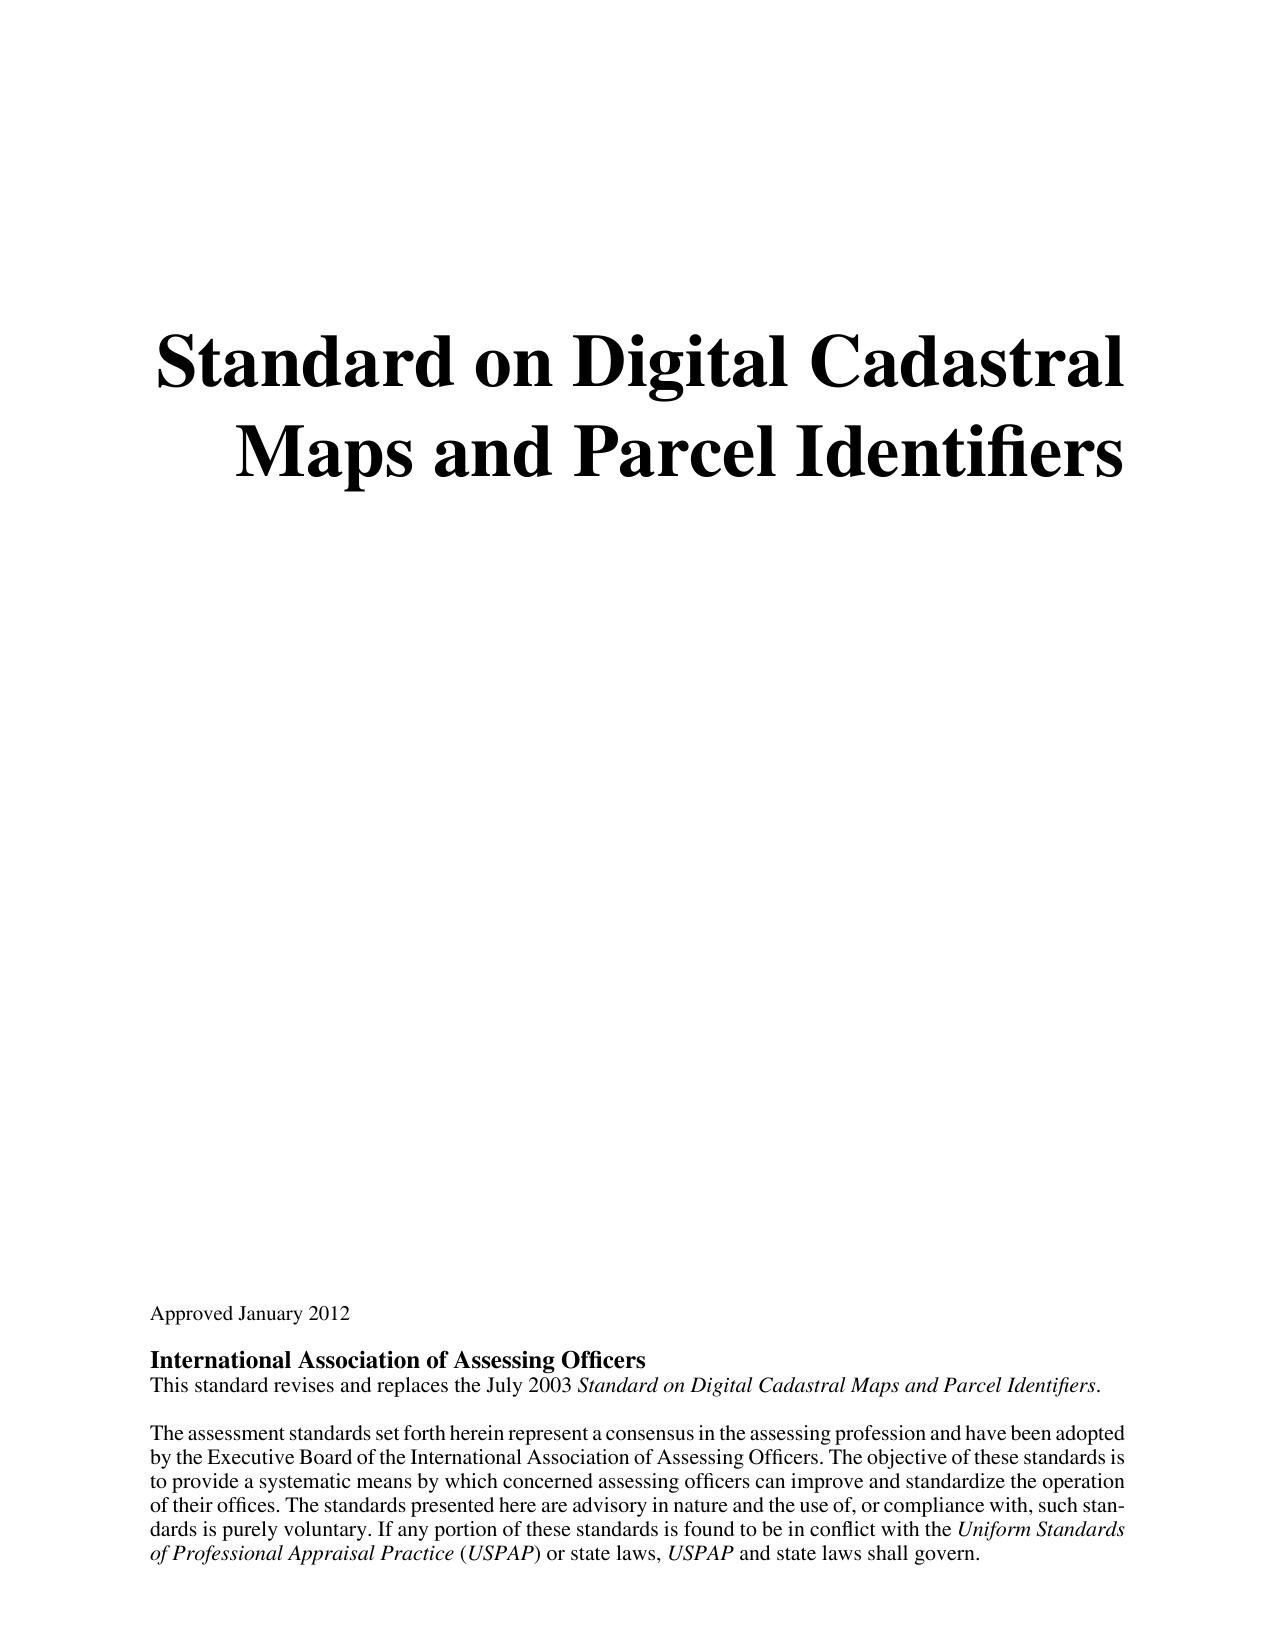 Standard on Digital Cadastral 2019